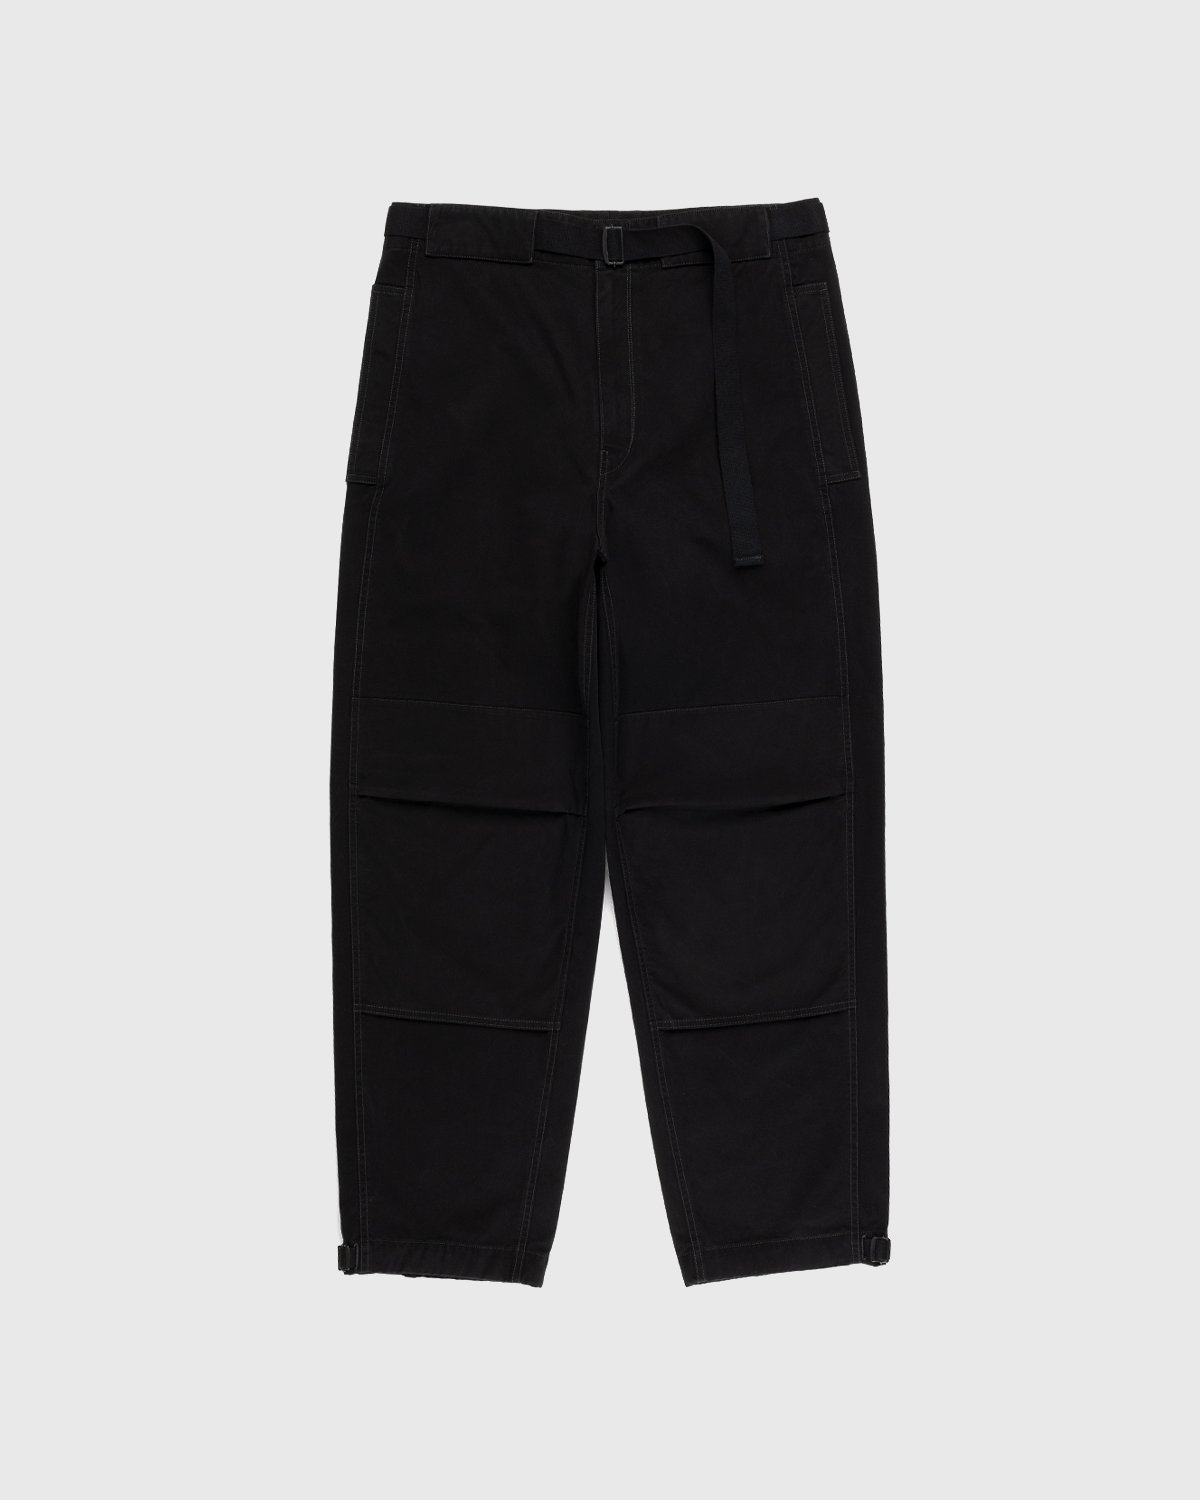 Lemaire – Utility Pants Black | Highsnobiety Shop